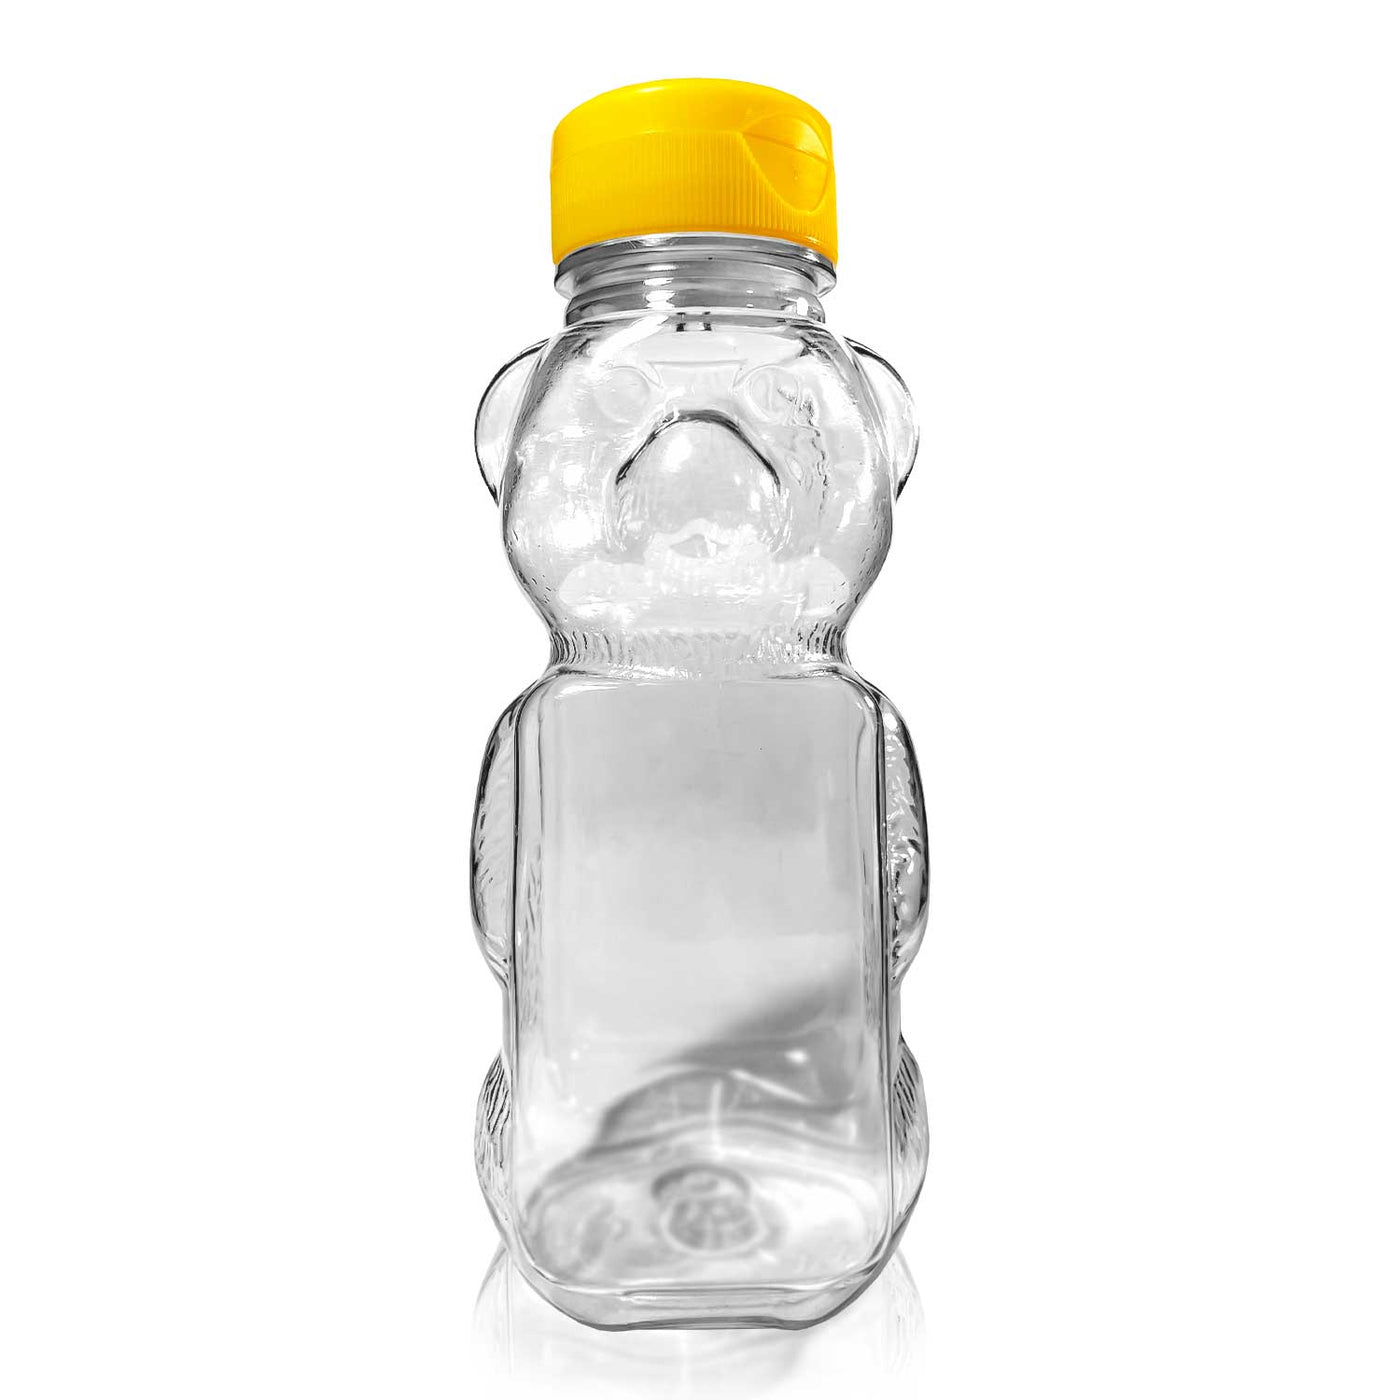 Bear bottle of 12 oz